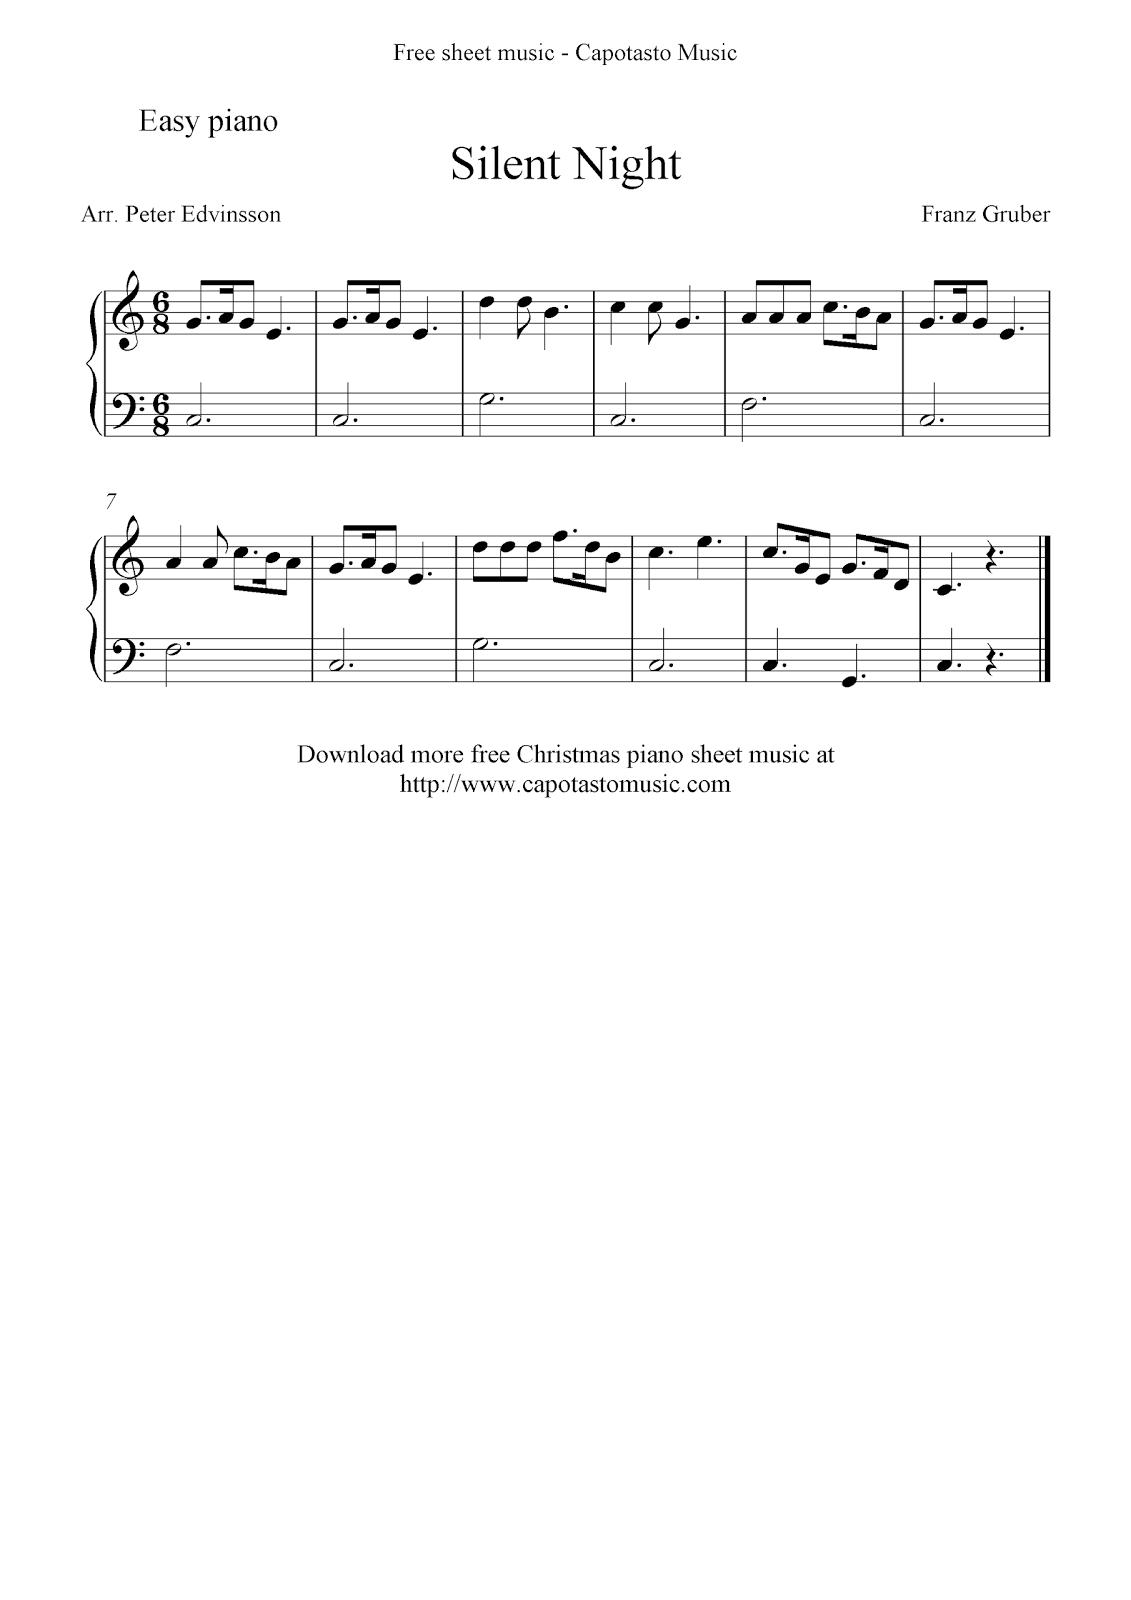 Free easy Christmas piano sheet music, Silent Night